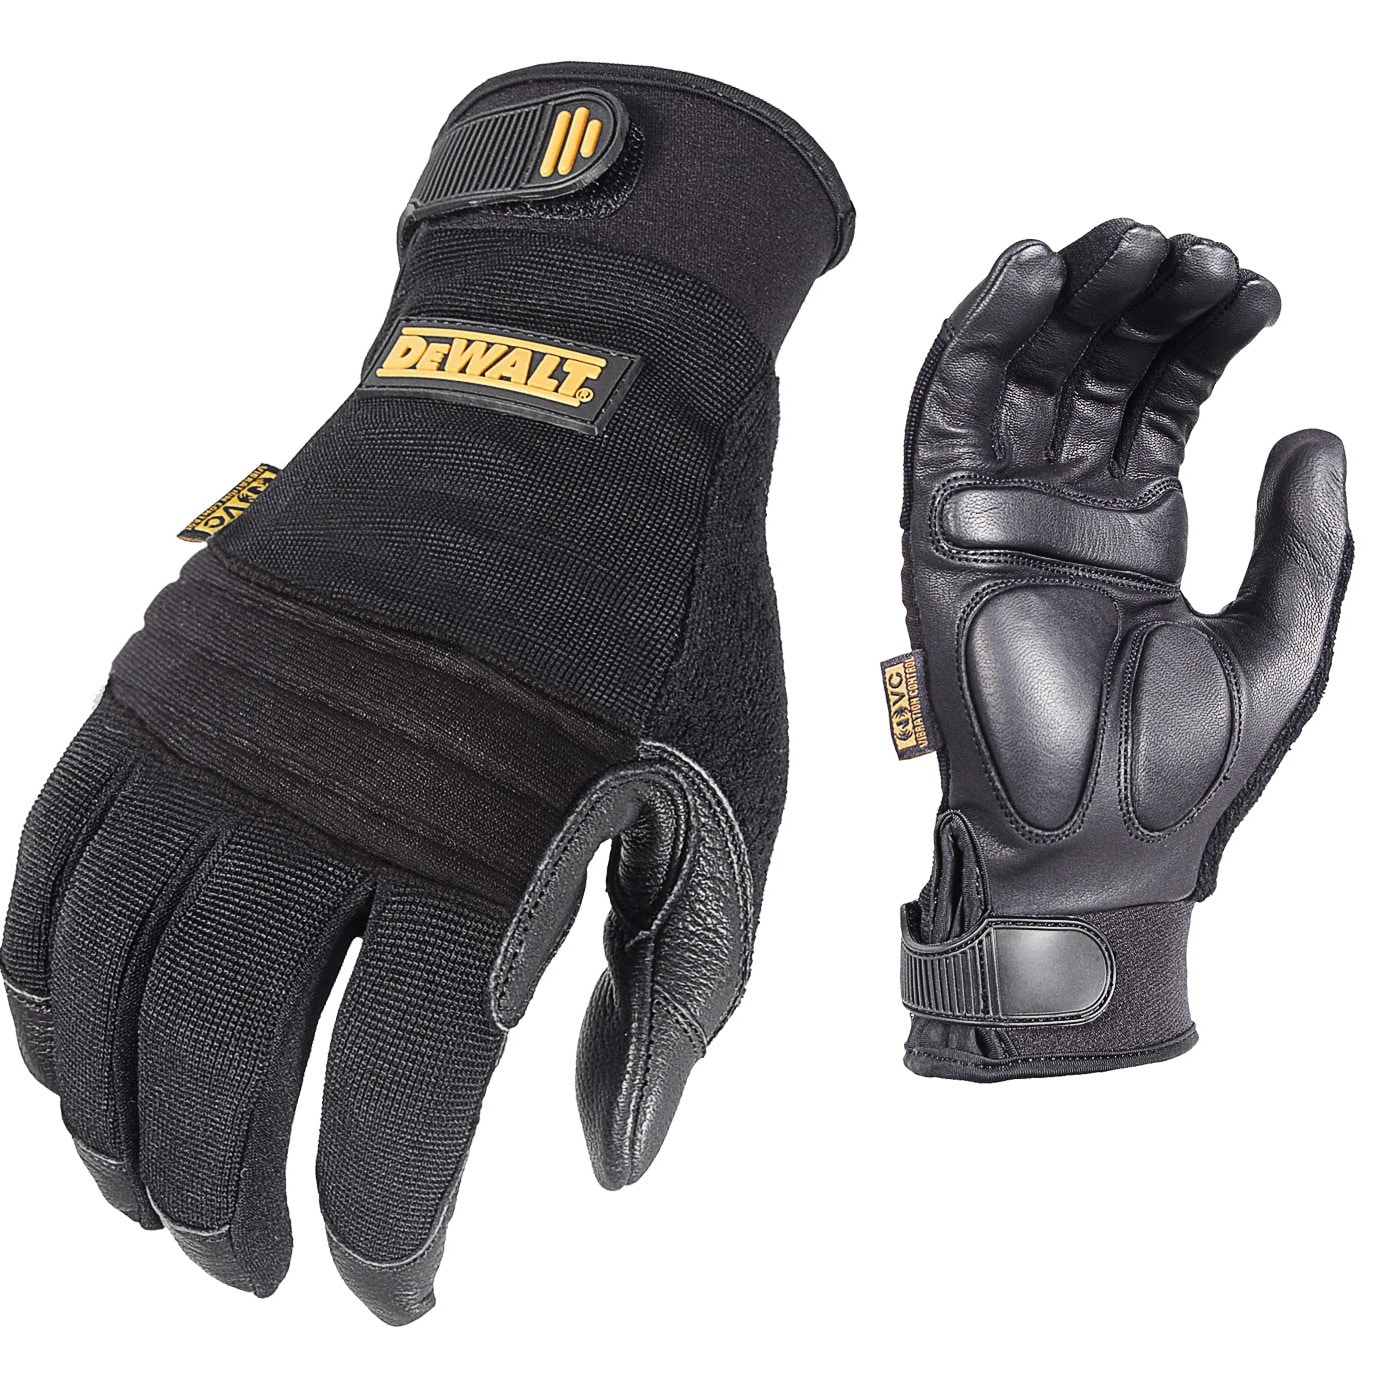 Leather Gardening Gloves Mechanics Utility Work Gloves for Drivers Premium 